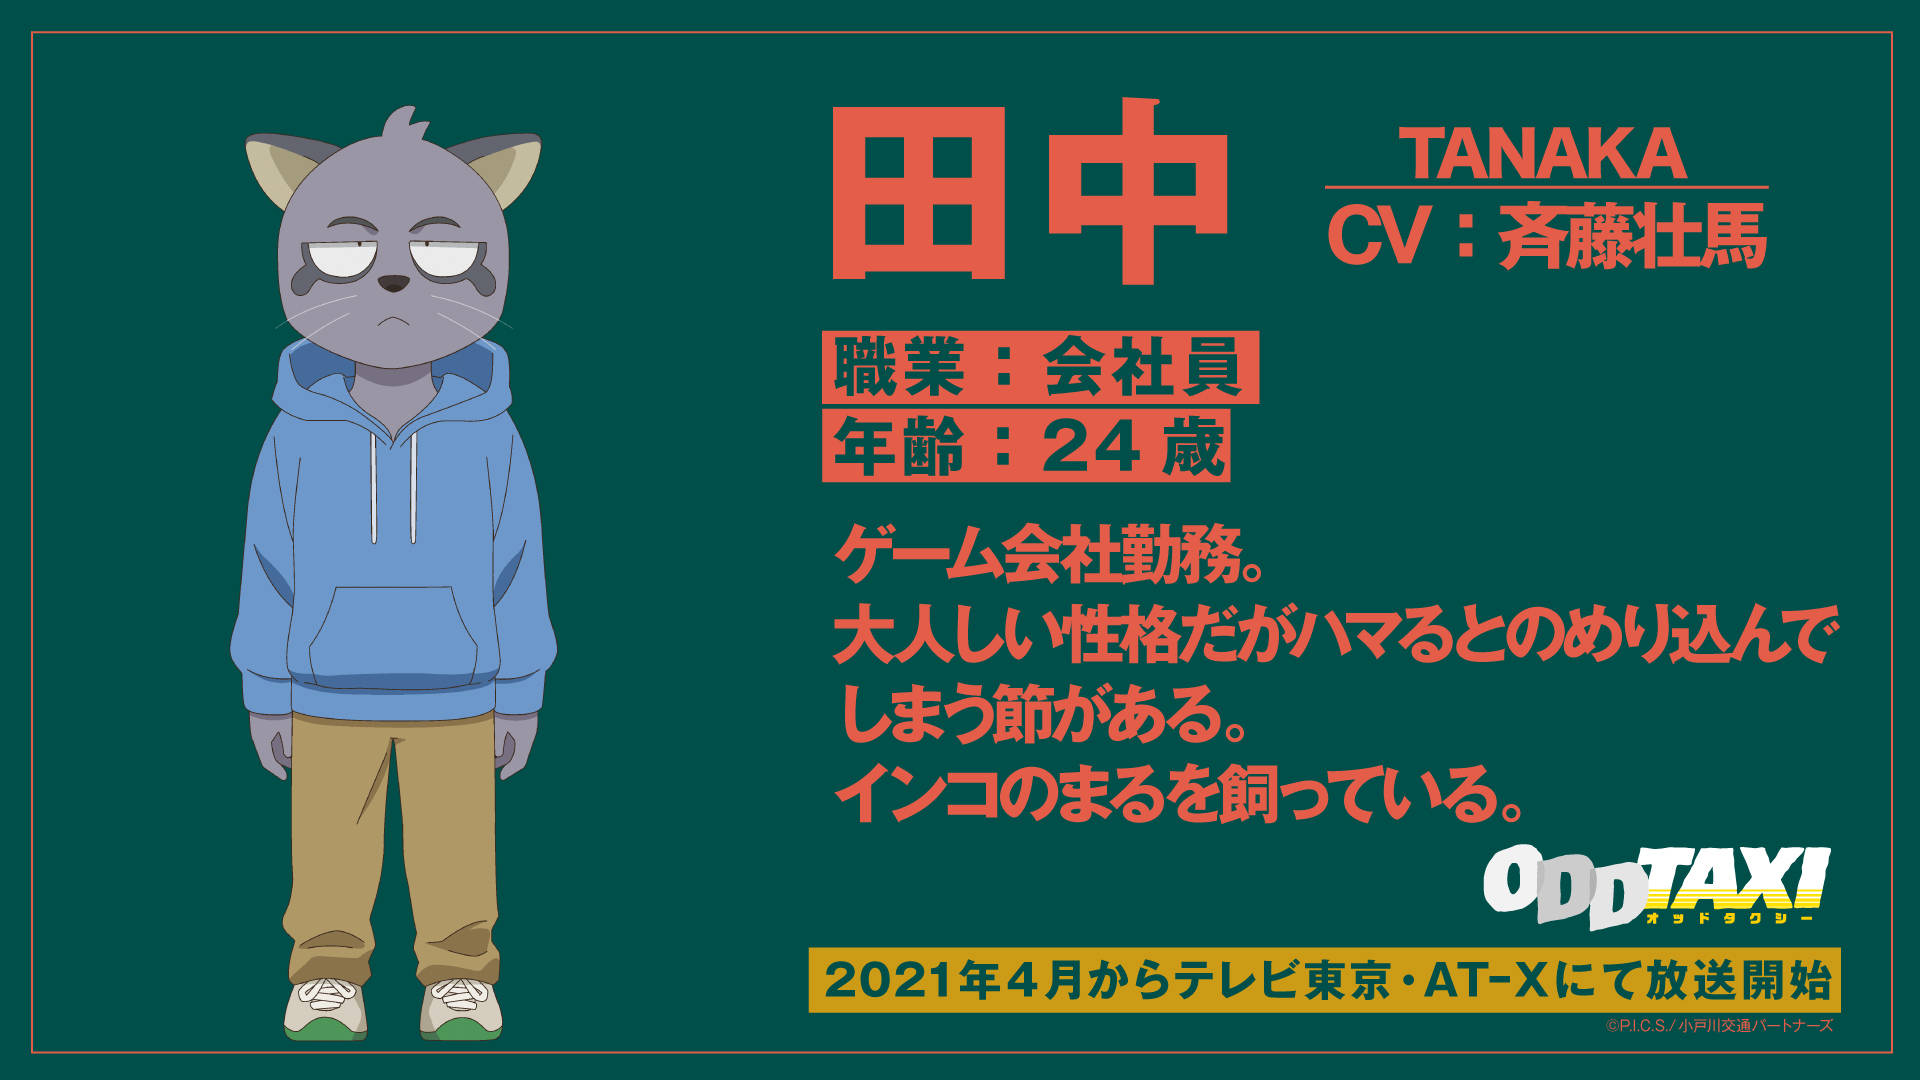 Odd Taxi Tanaka Profile Wallpaper